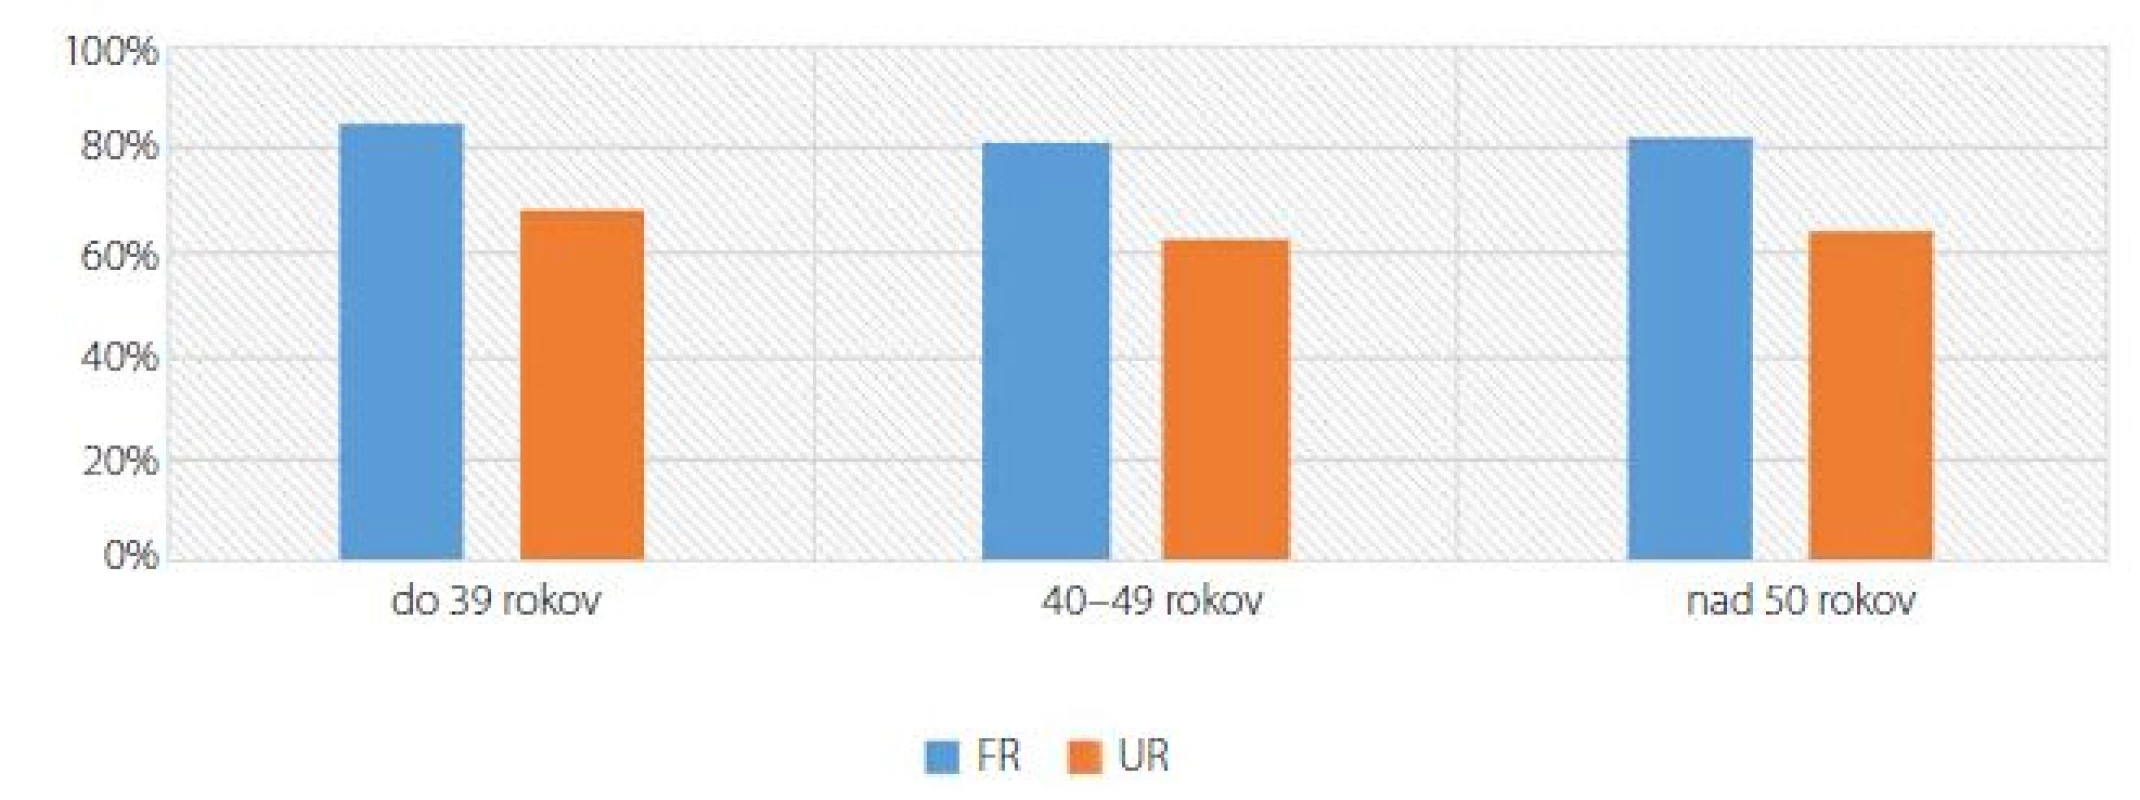 Zobrazenie fertilisation rate a utilisation rate vzhľadom k veku<br>
Fig. 5. Age influence on the Utilisation rate and Fertilisation rate after IVF- ET